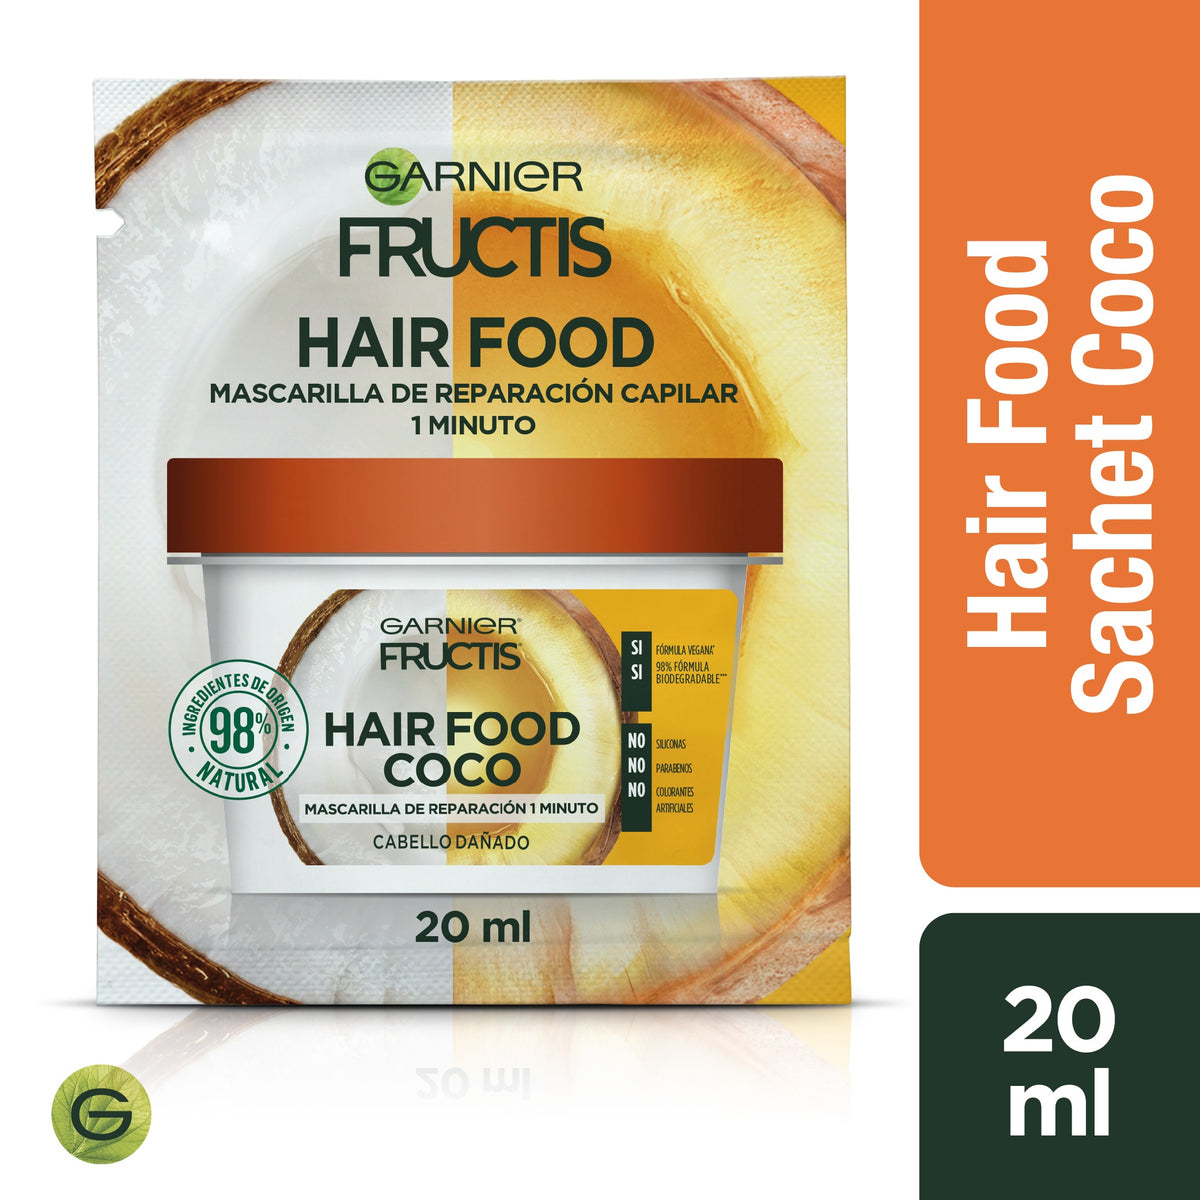 Fructis Hair Food Ct Coconut Sch 20 ml